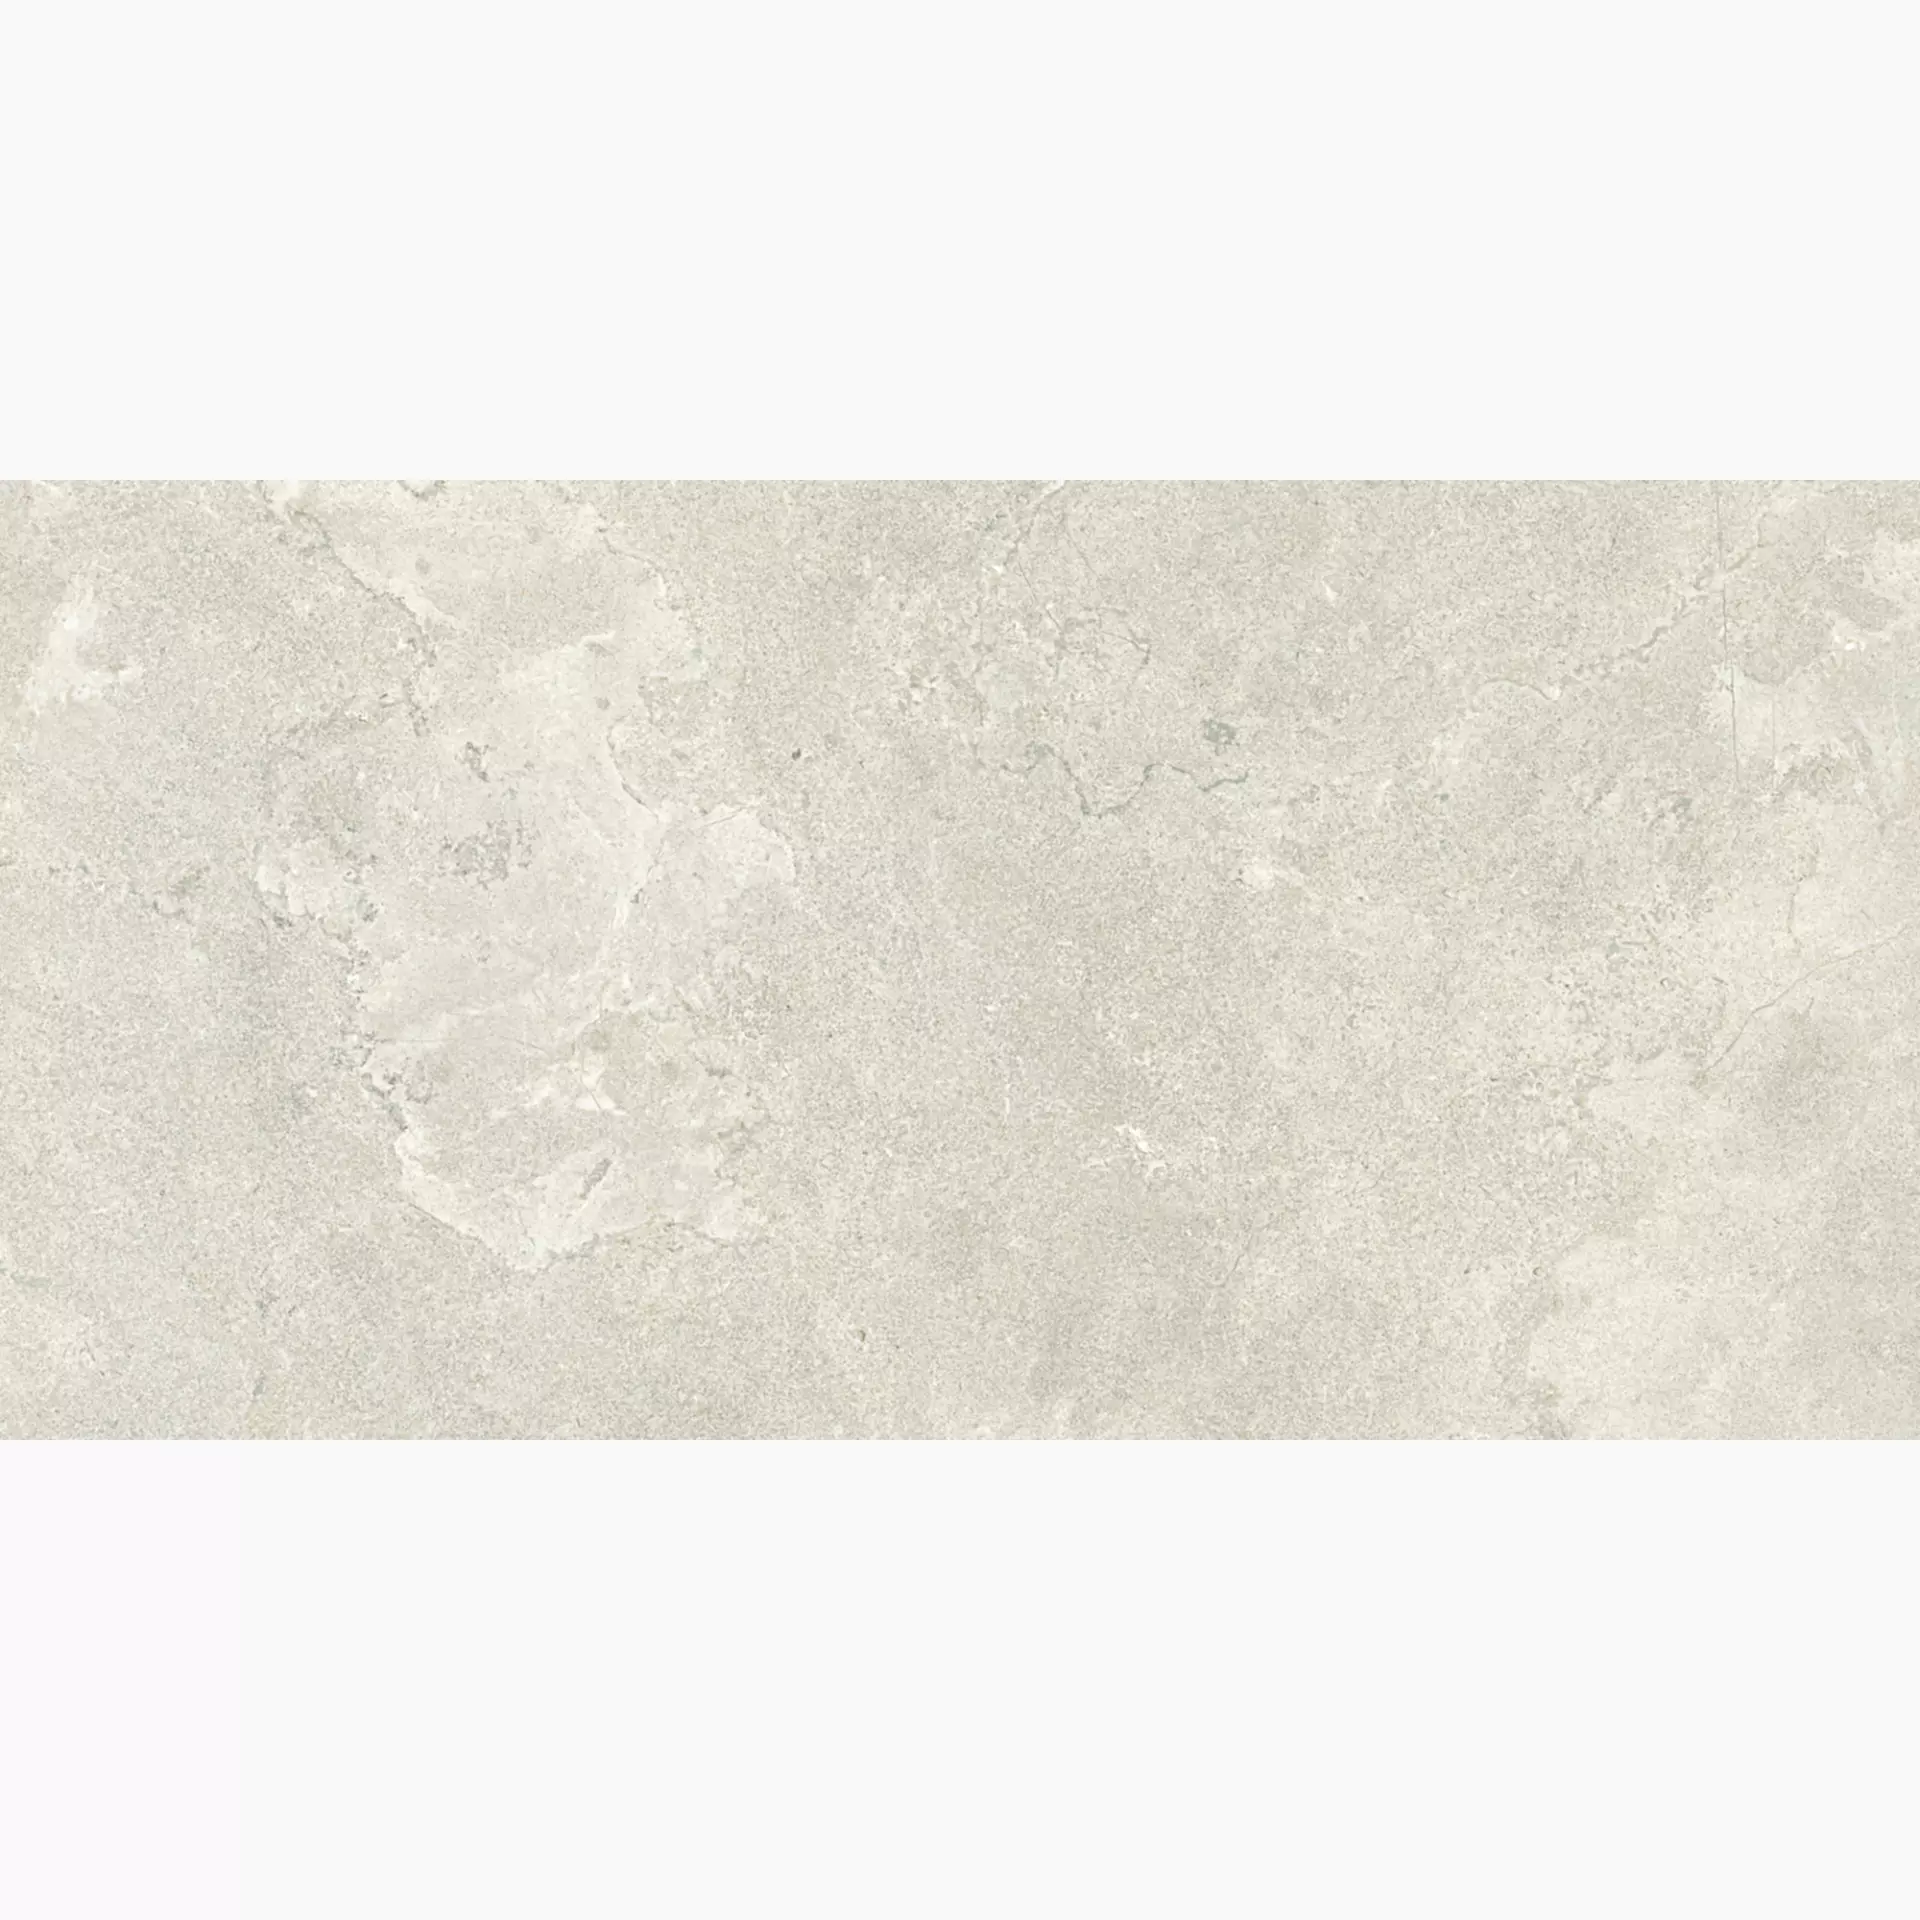 Italgraniti Dorset Cross Cut Bianco Naturale – Matt DR01BA 60x120cm rectified 9mm